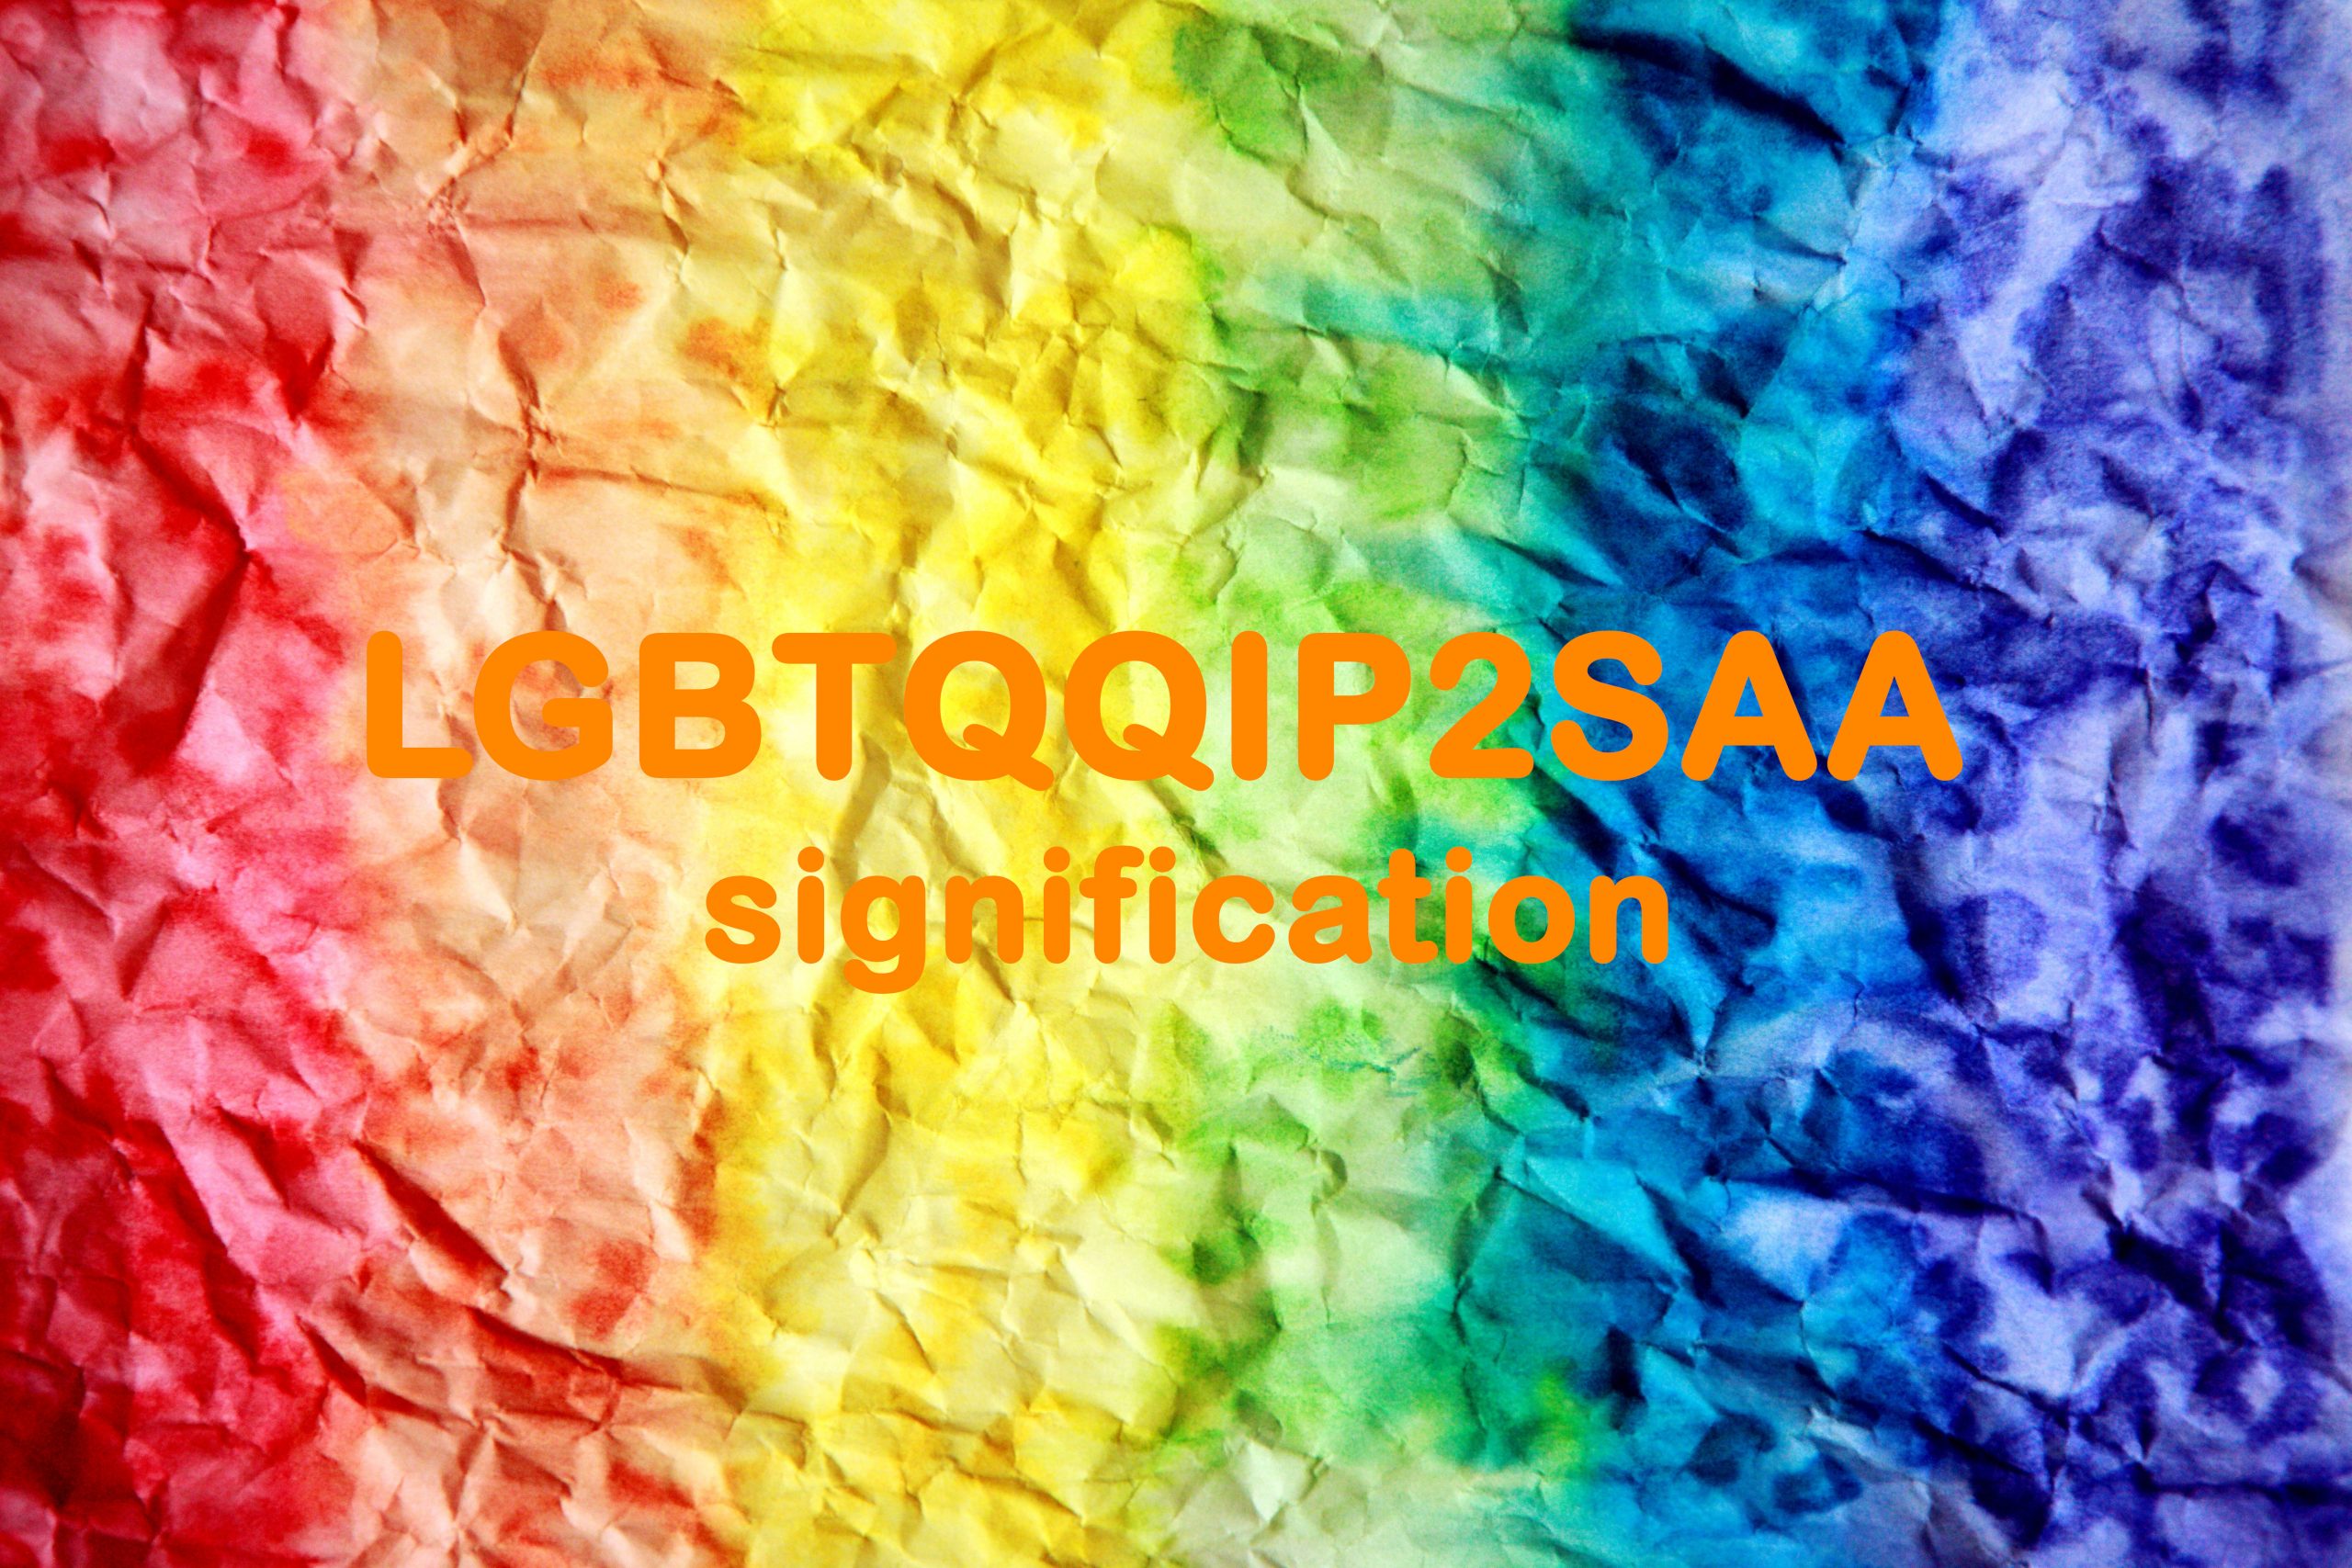 LGBTQQIP2SAA signification